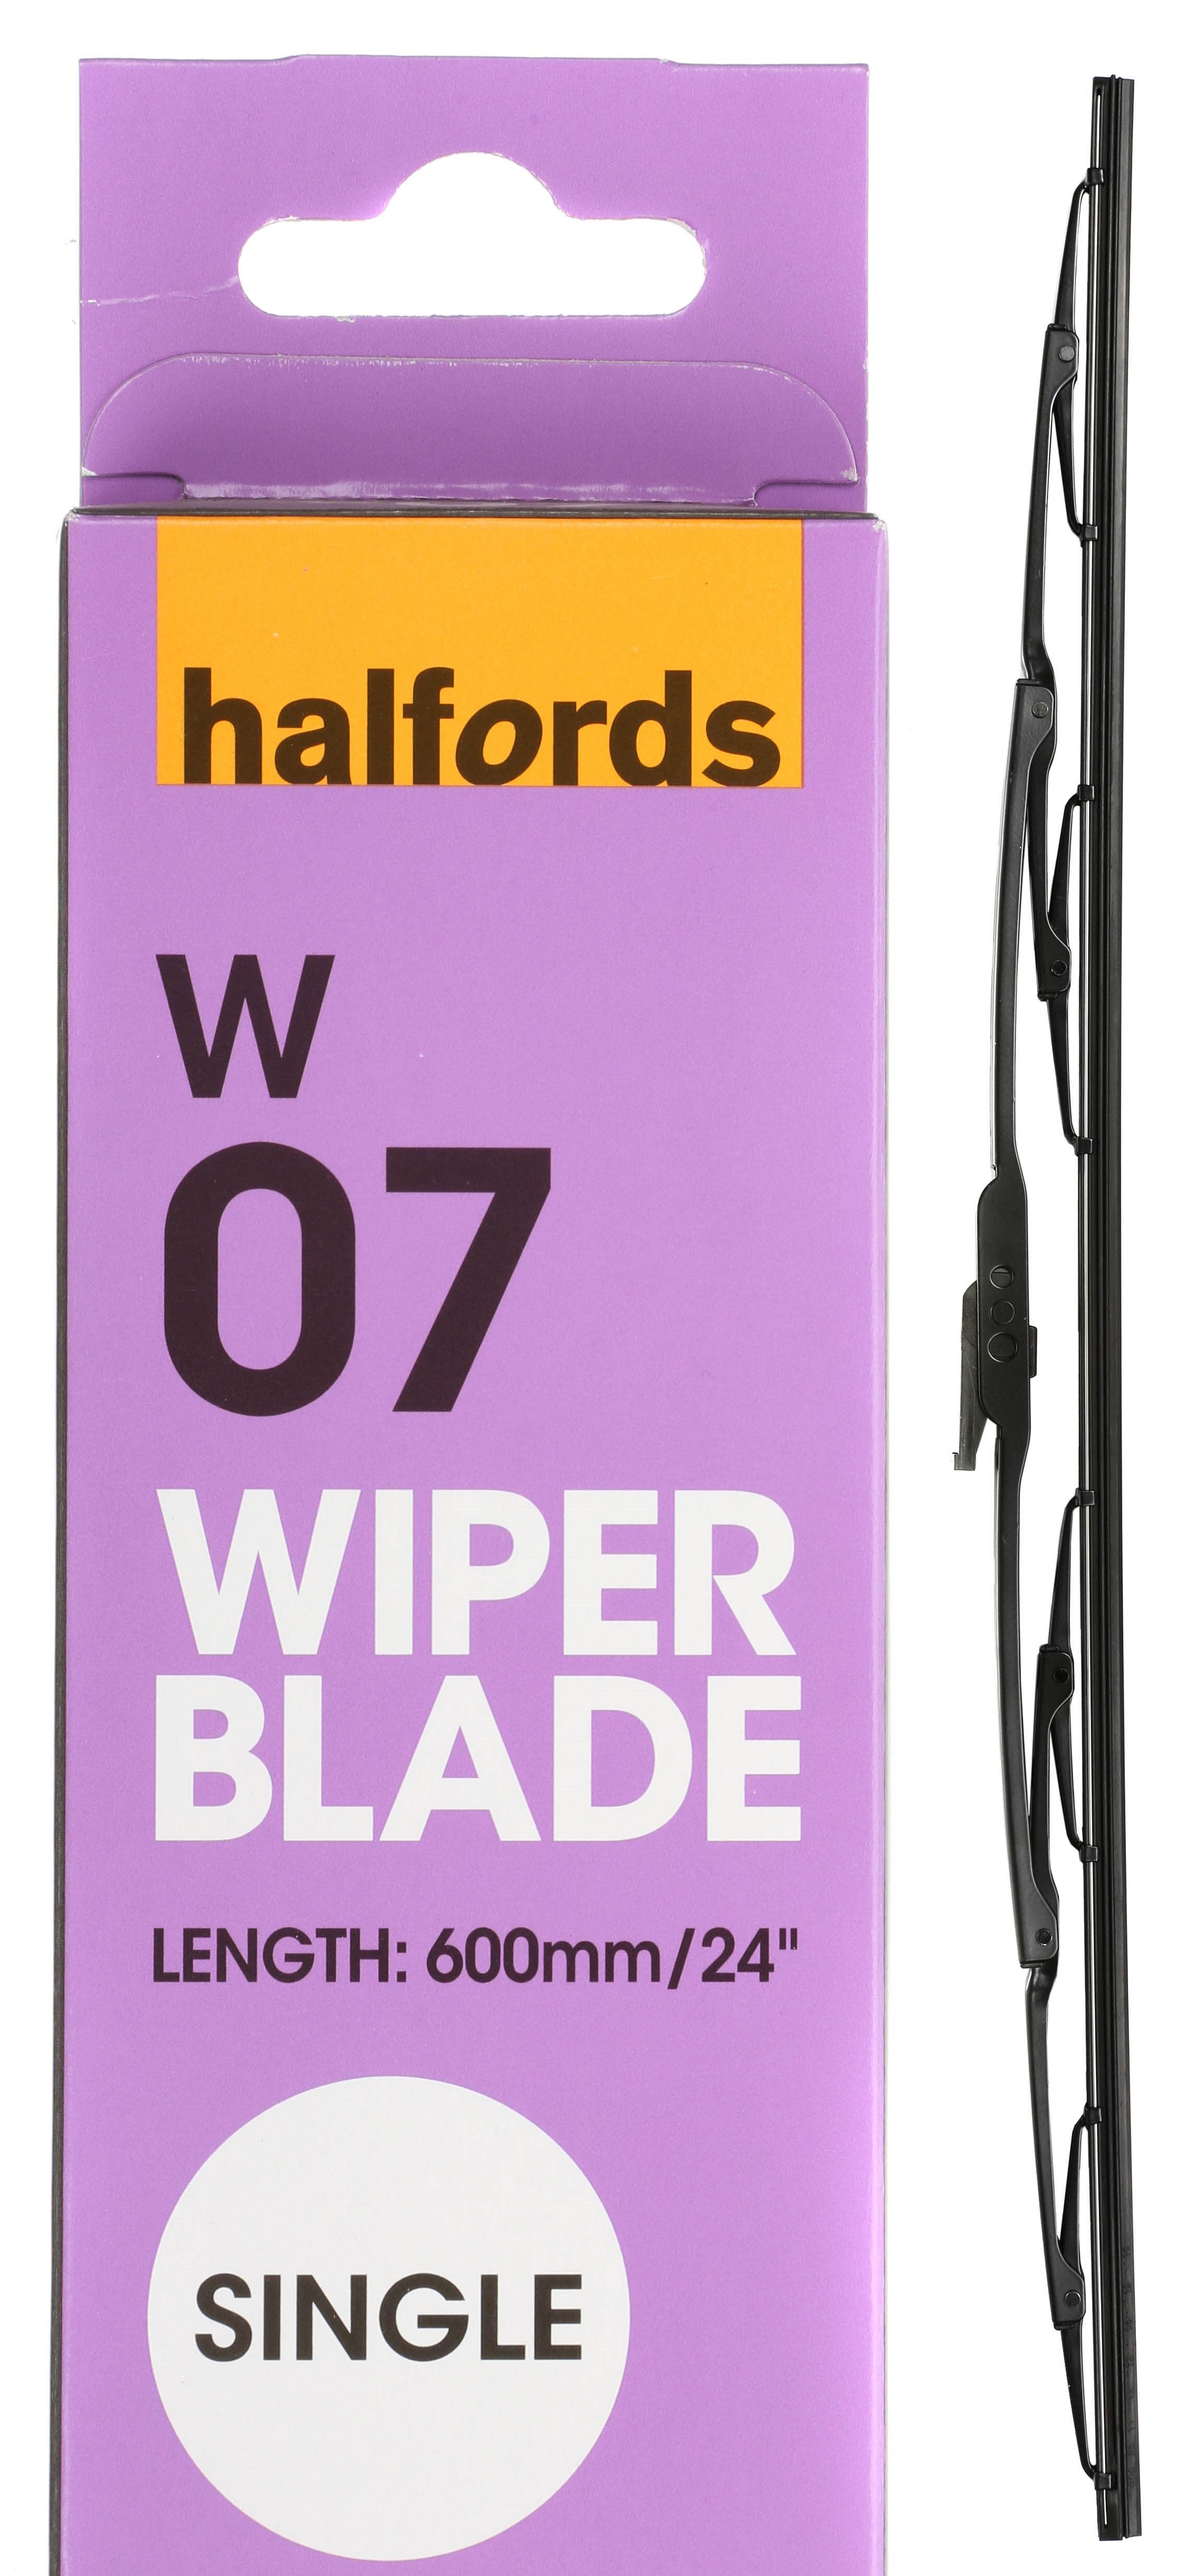 Halfords W07 Wiper Blade - Single